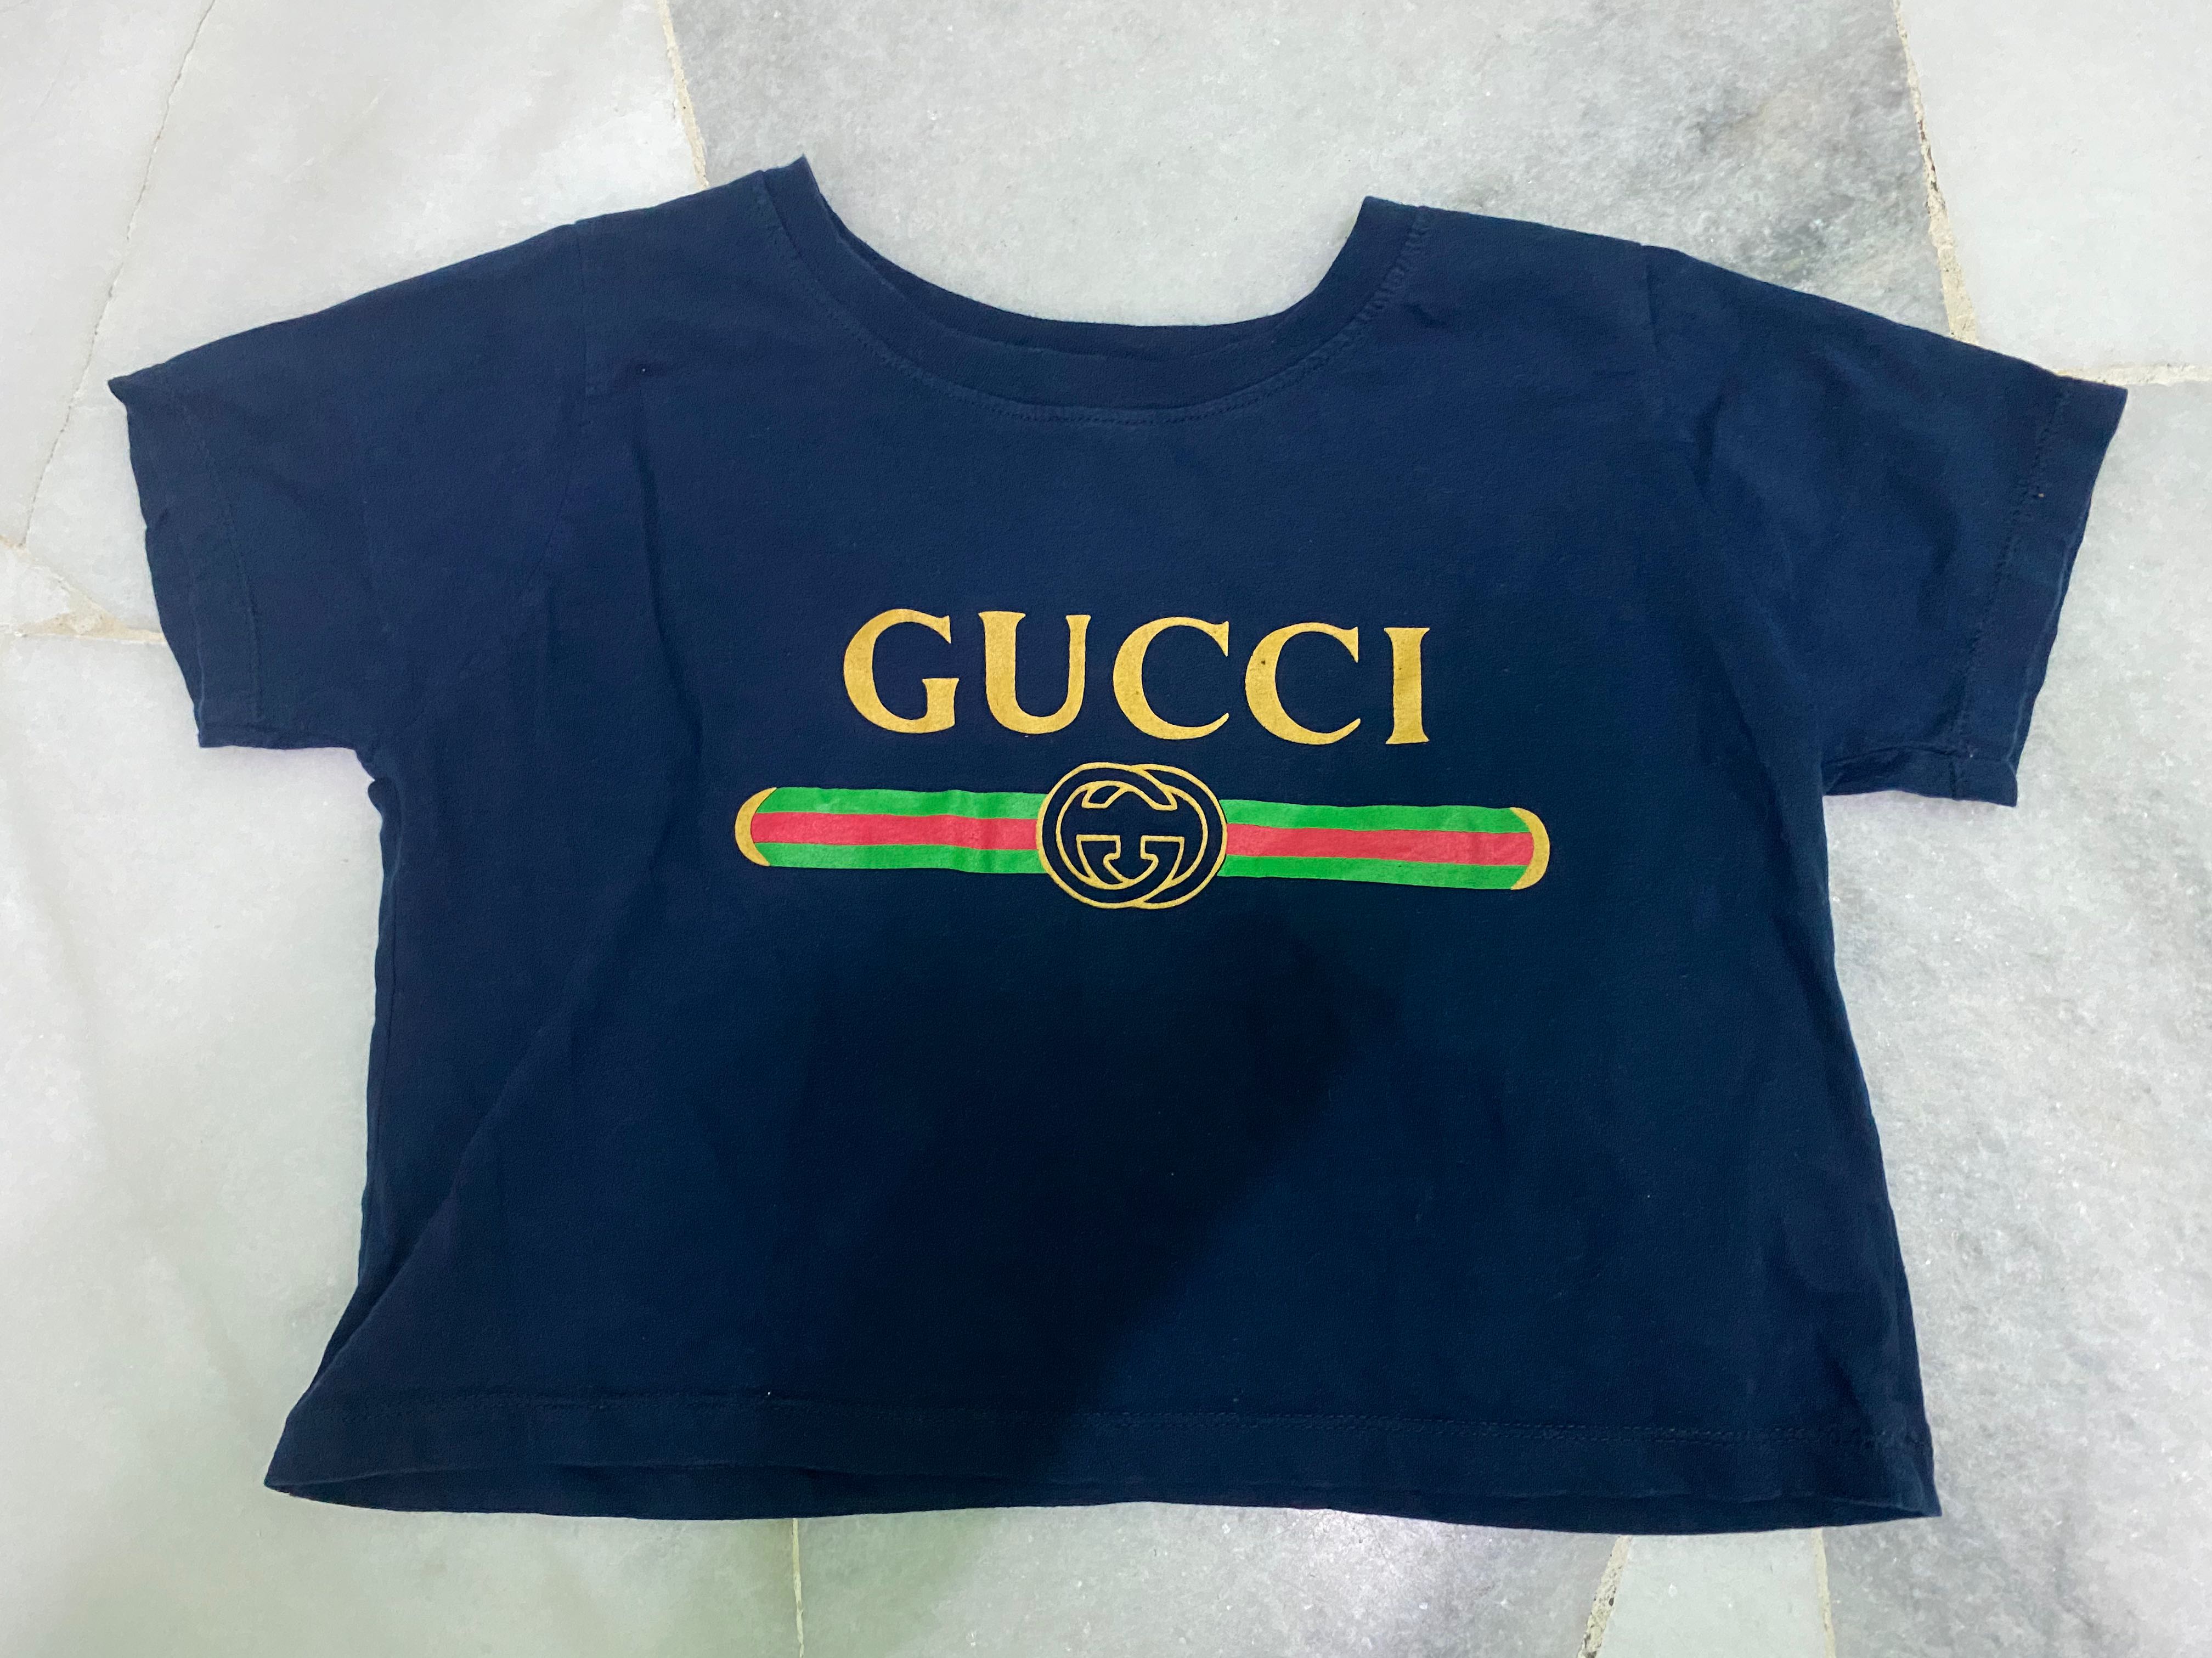 Gucci Crop Top 